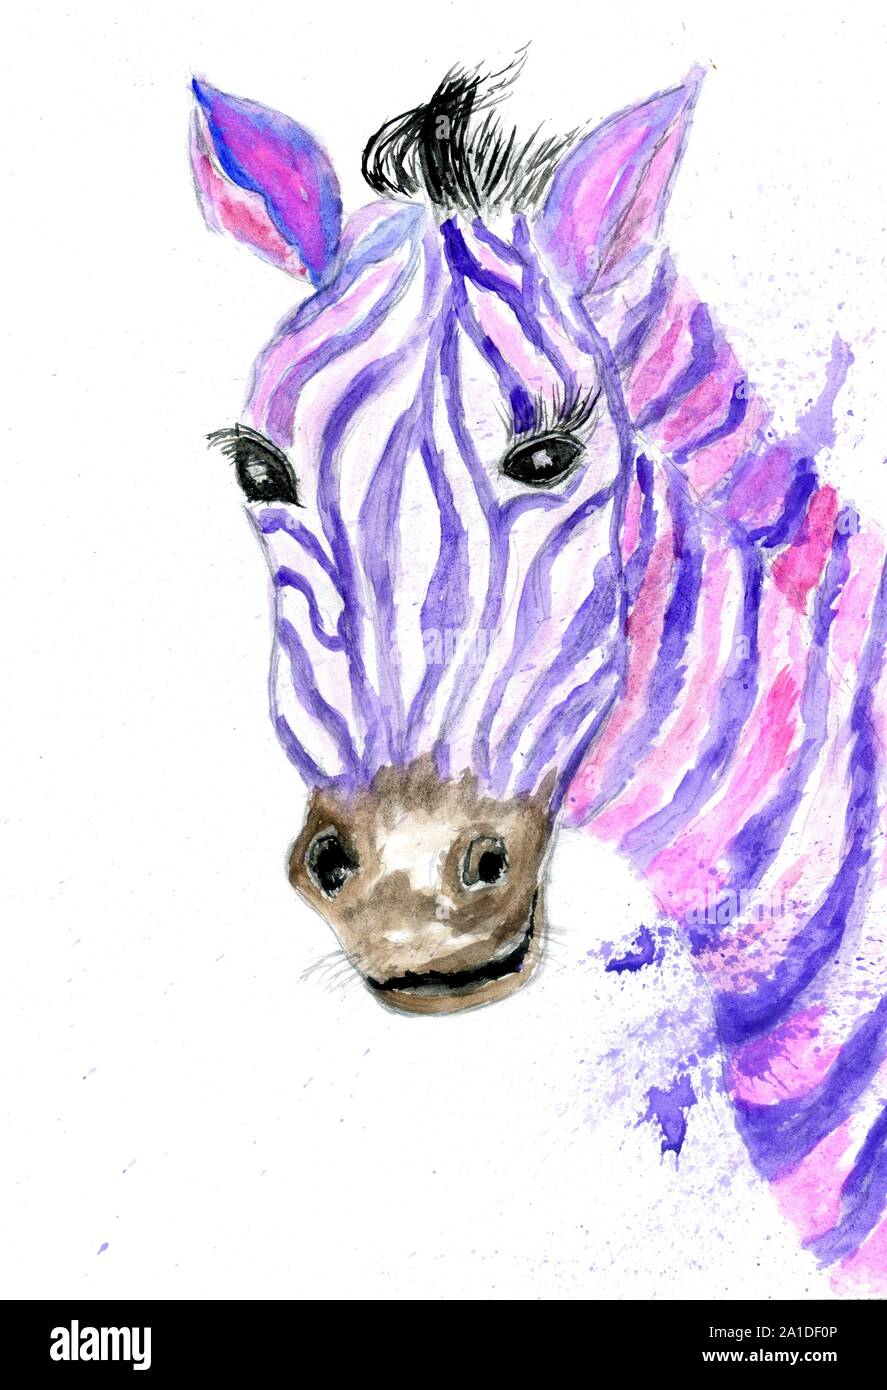 Watercolor illustration with a zebra portrait. Beautiful wildlife